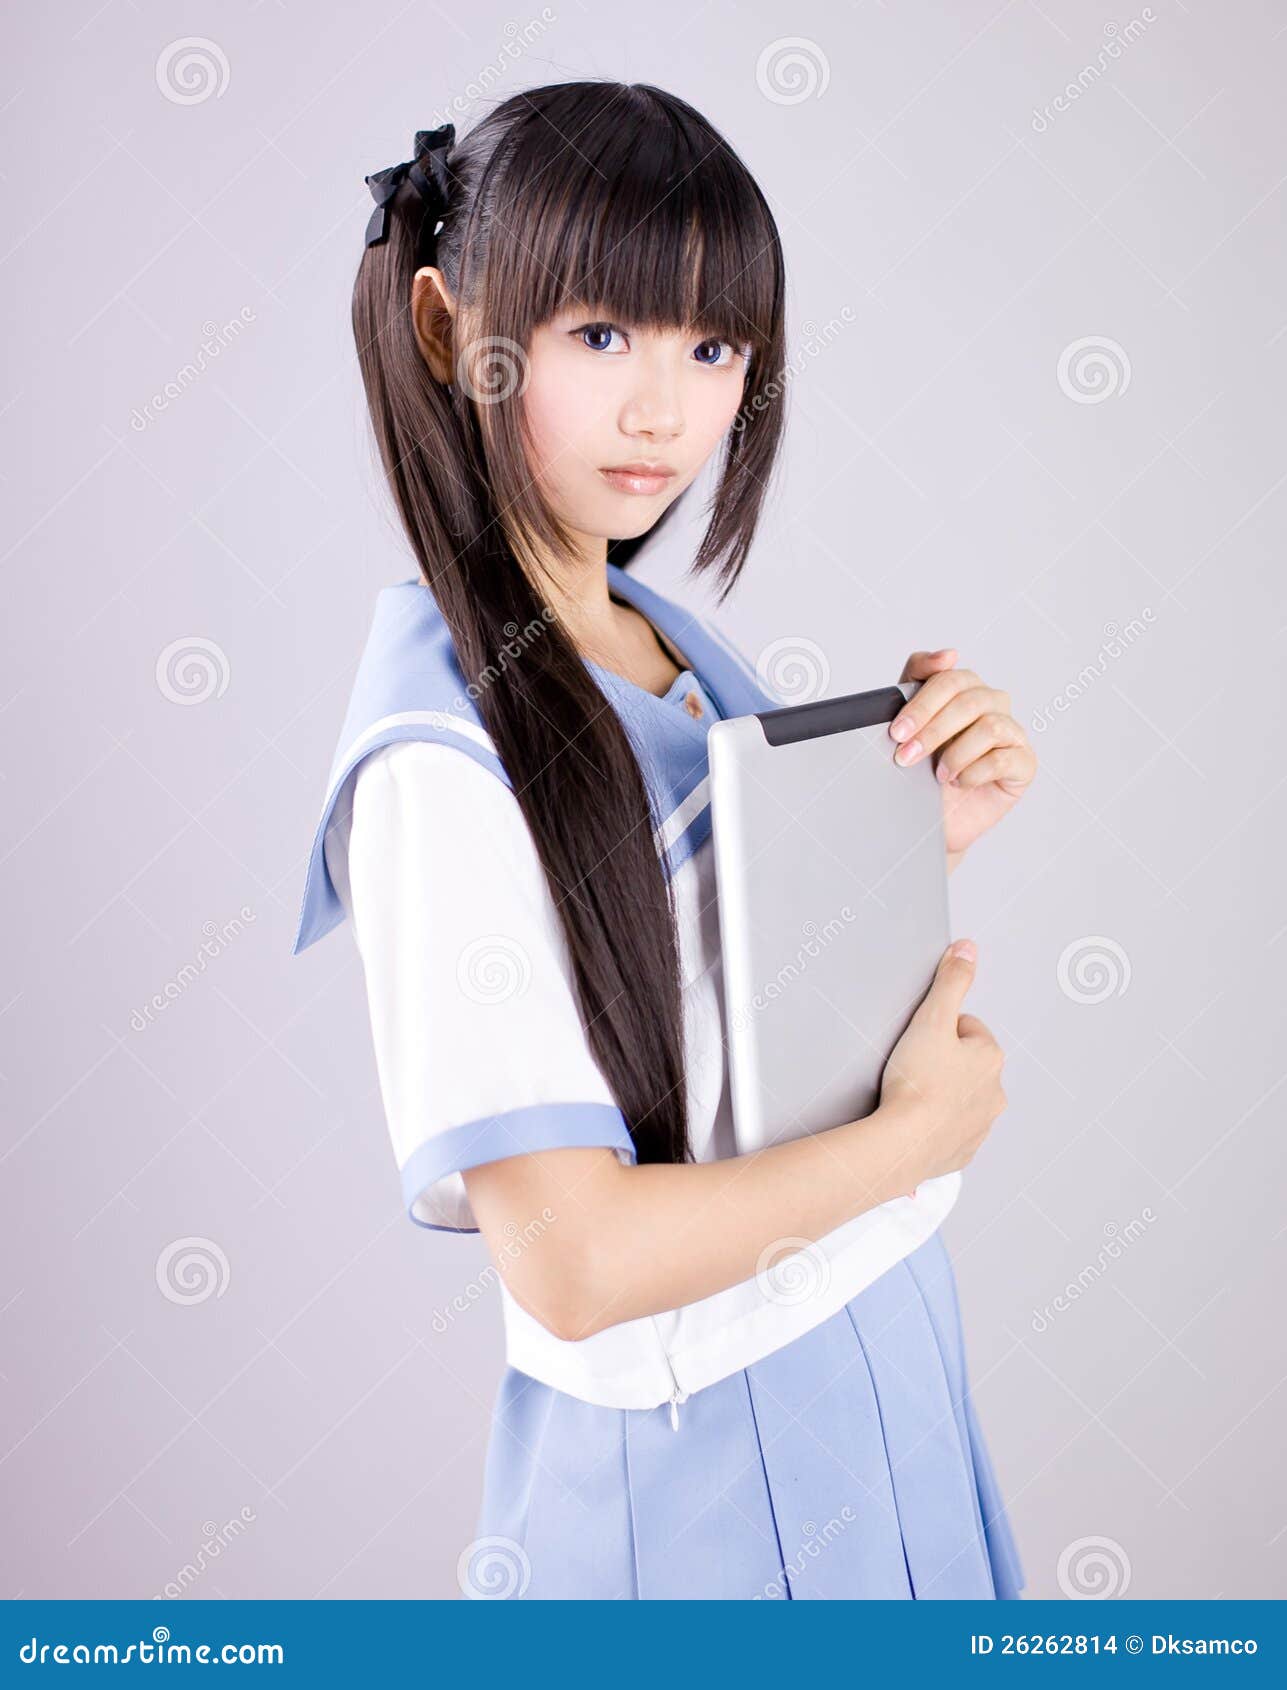 japanese young school girl